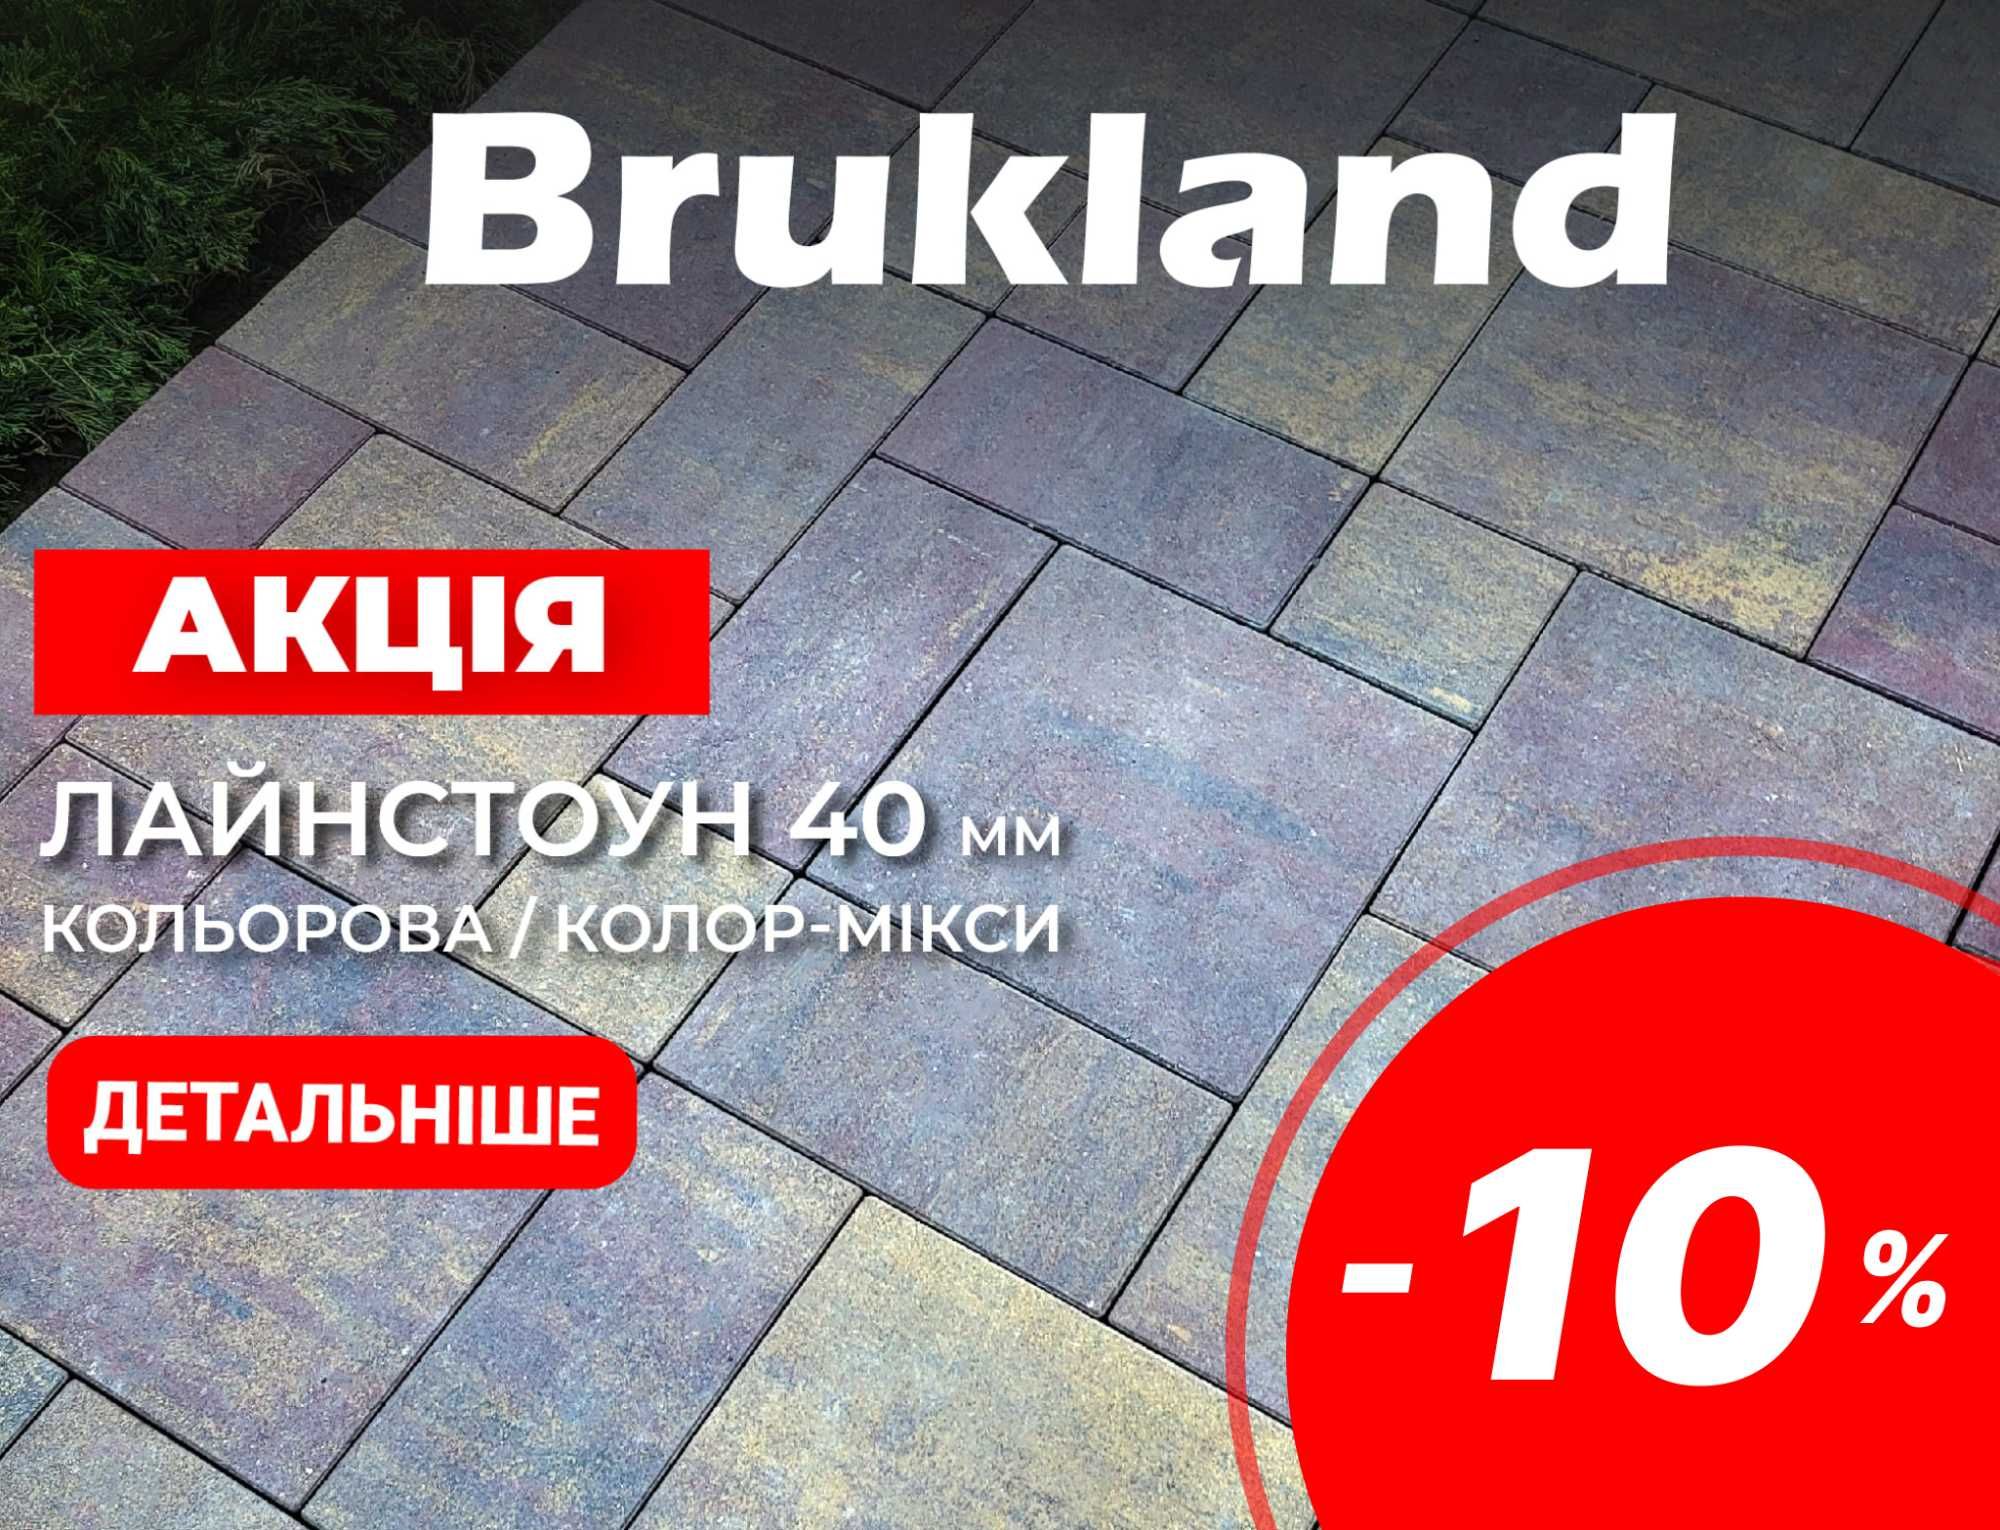 СКИДКА -10% Тротуарная плитка ТМ Brukland Лайнстоун 40 мм